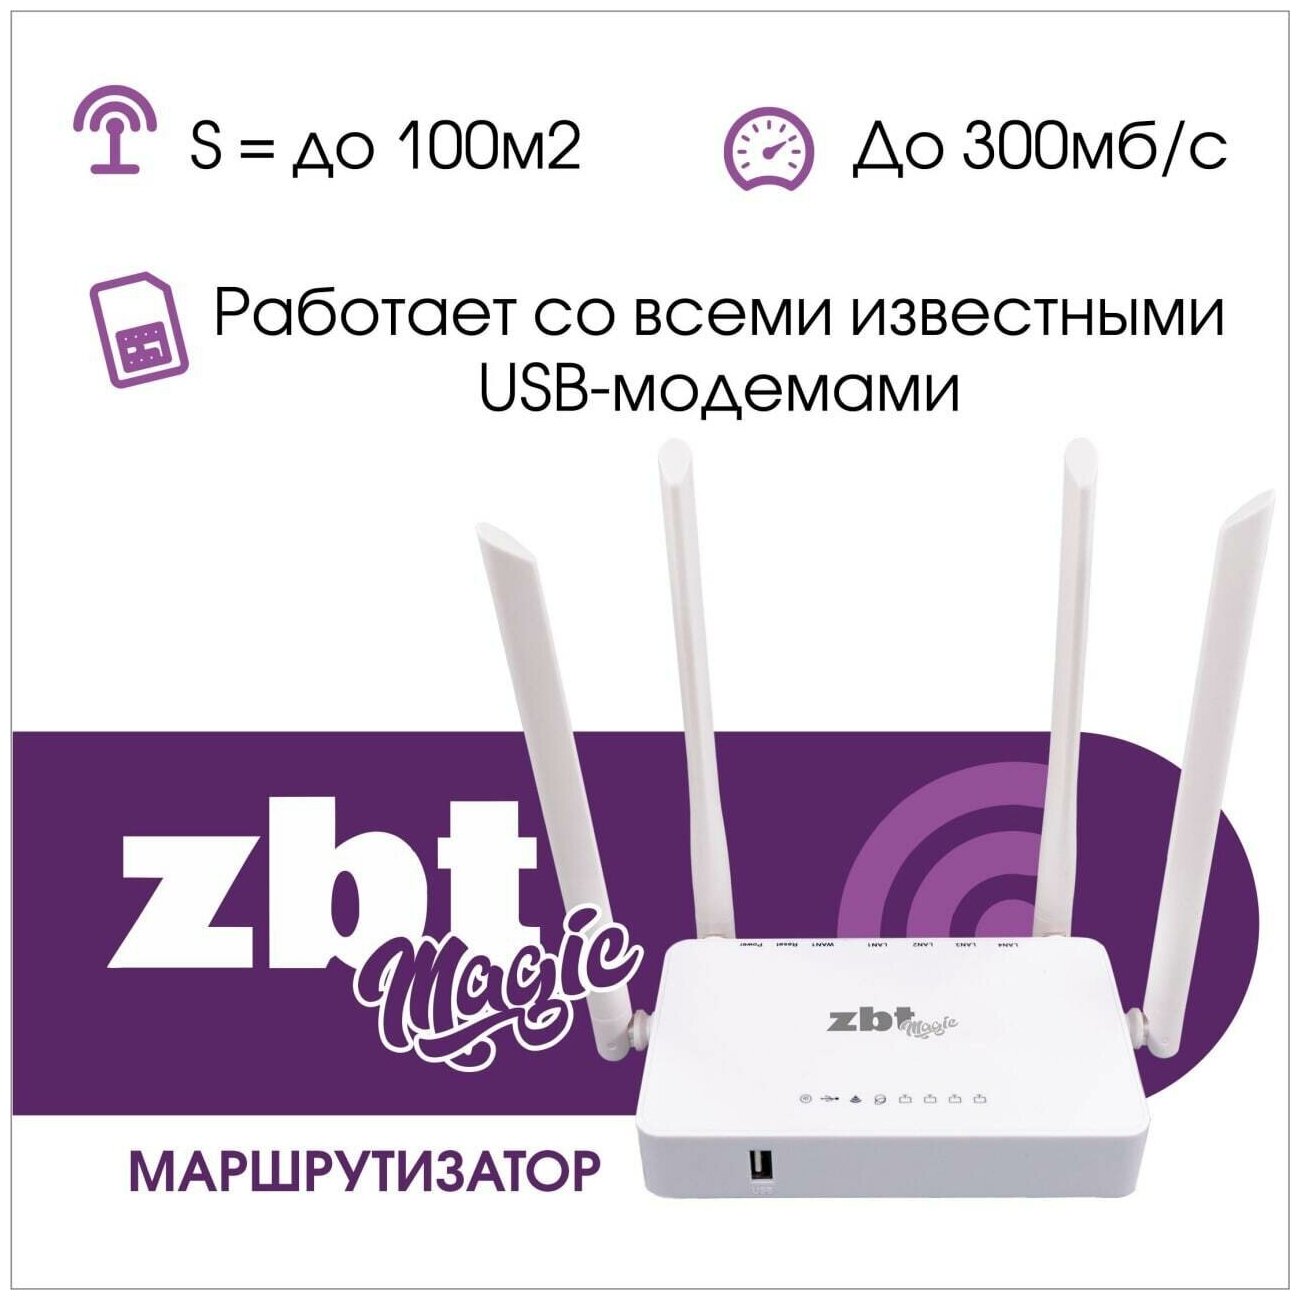 Wi-Fi Роутер ZBT WE1626 MAGIC Wi-Fi 4G 300мб/с